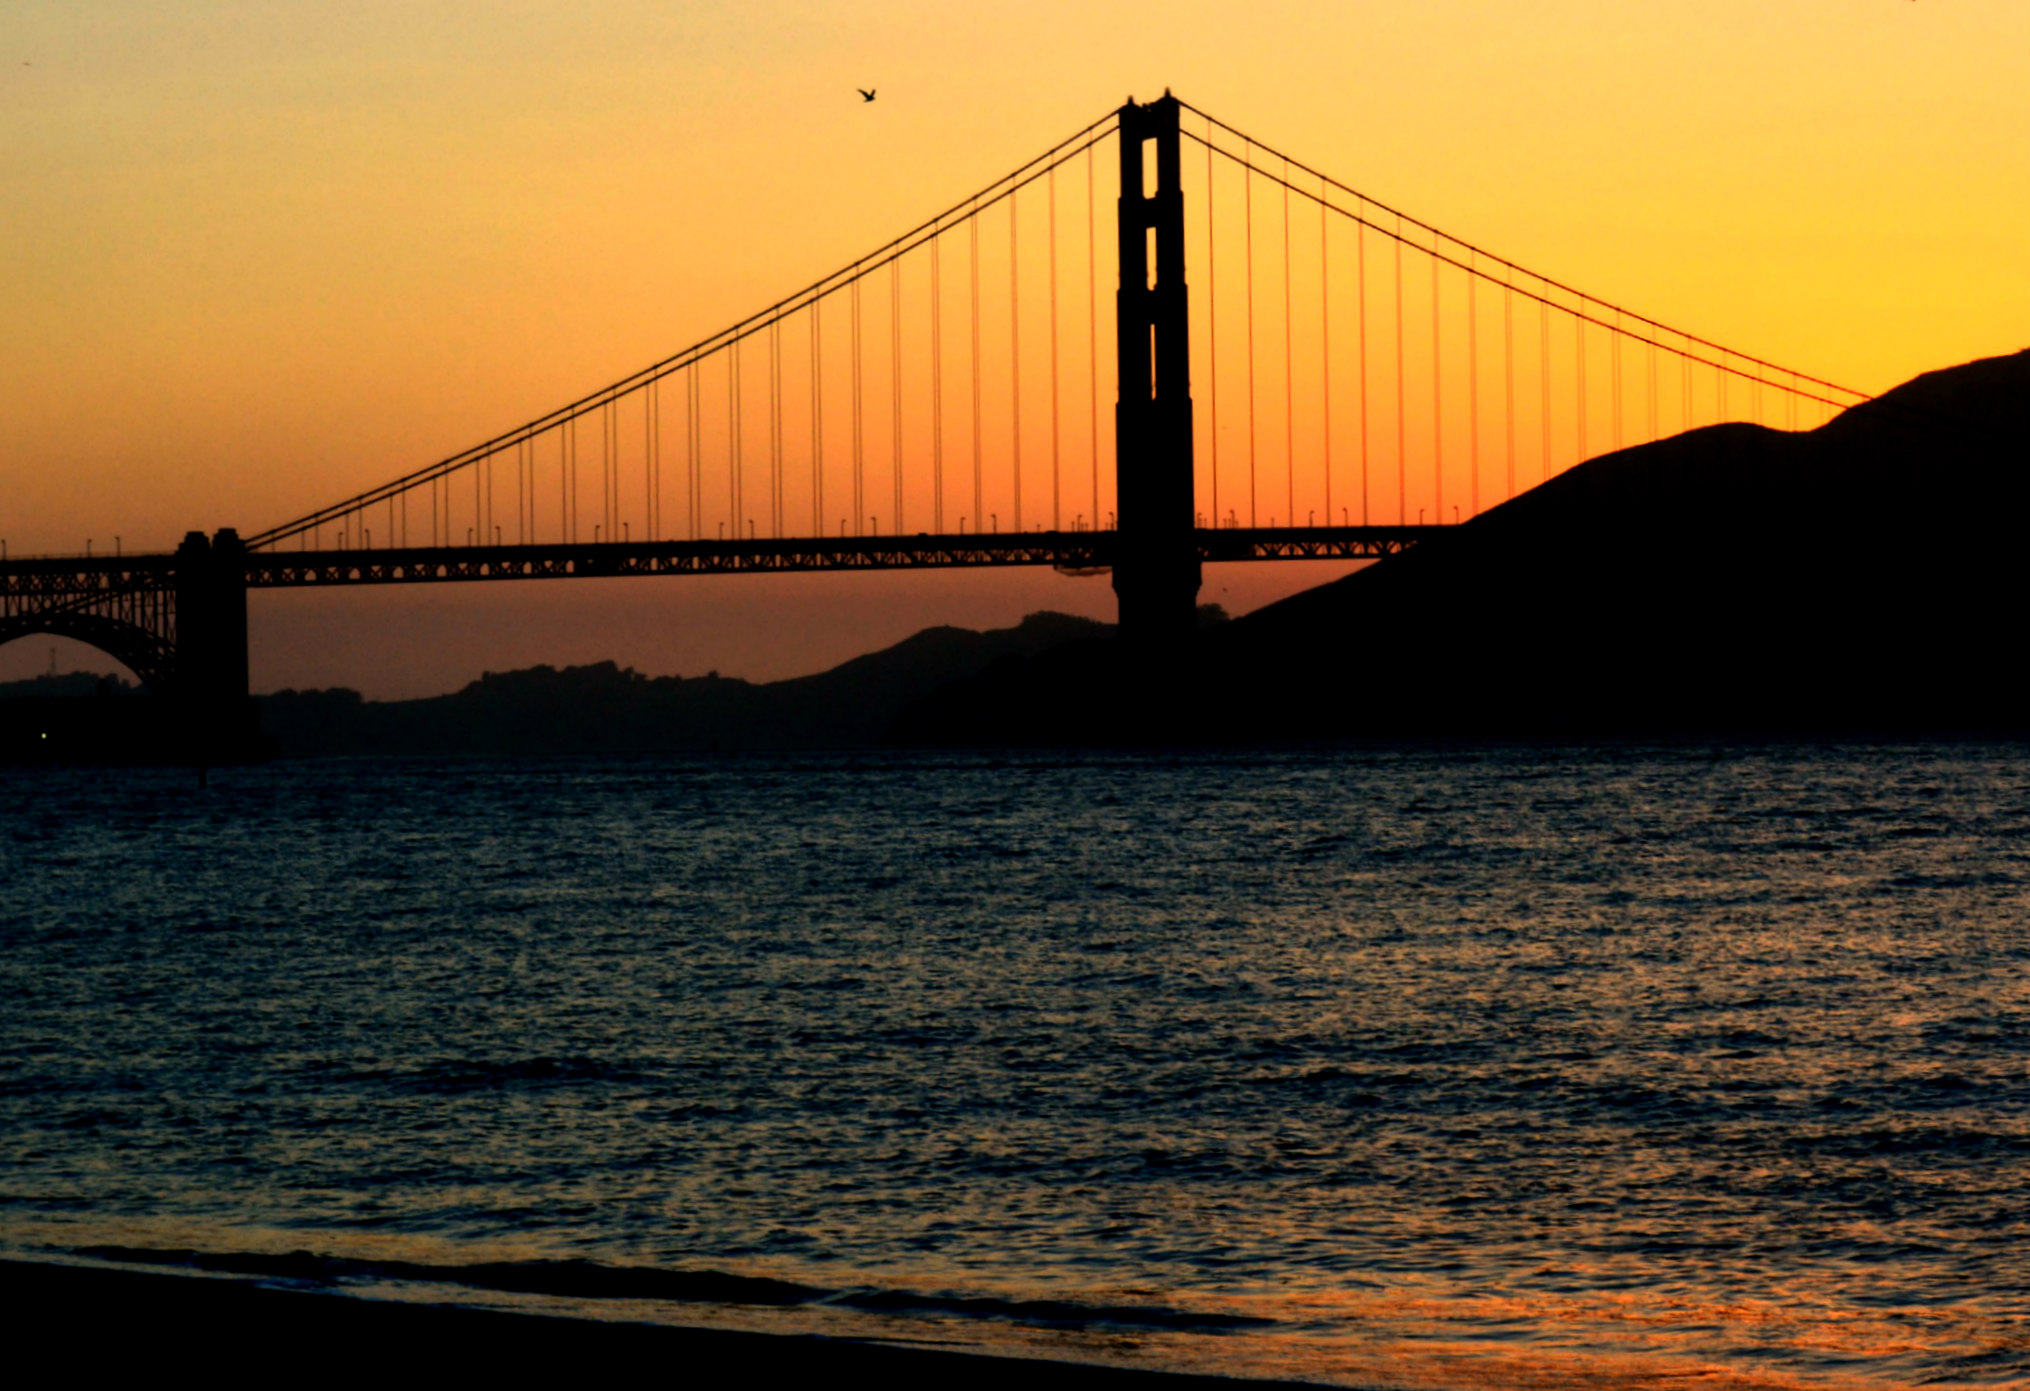 Golden Gate Sunset - 8x10 print
matte
white frame by Bridget Oates Photography